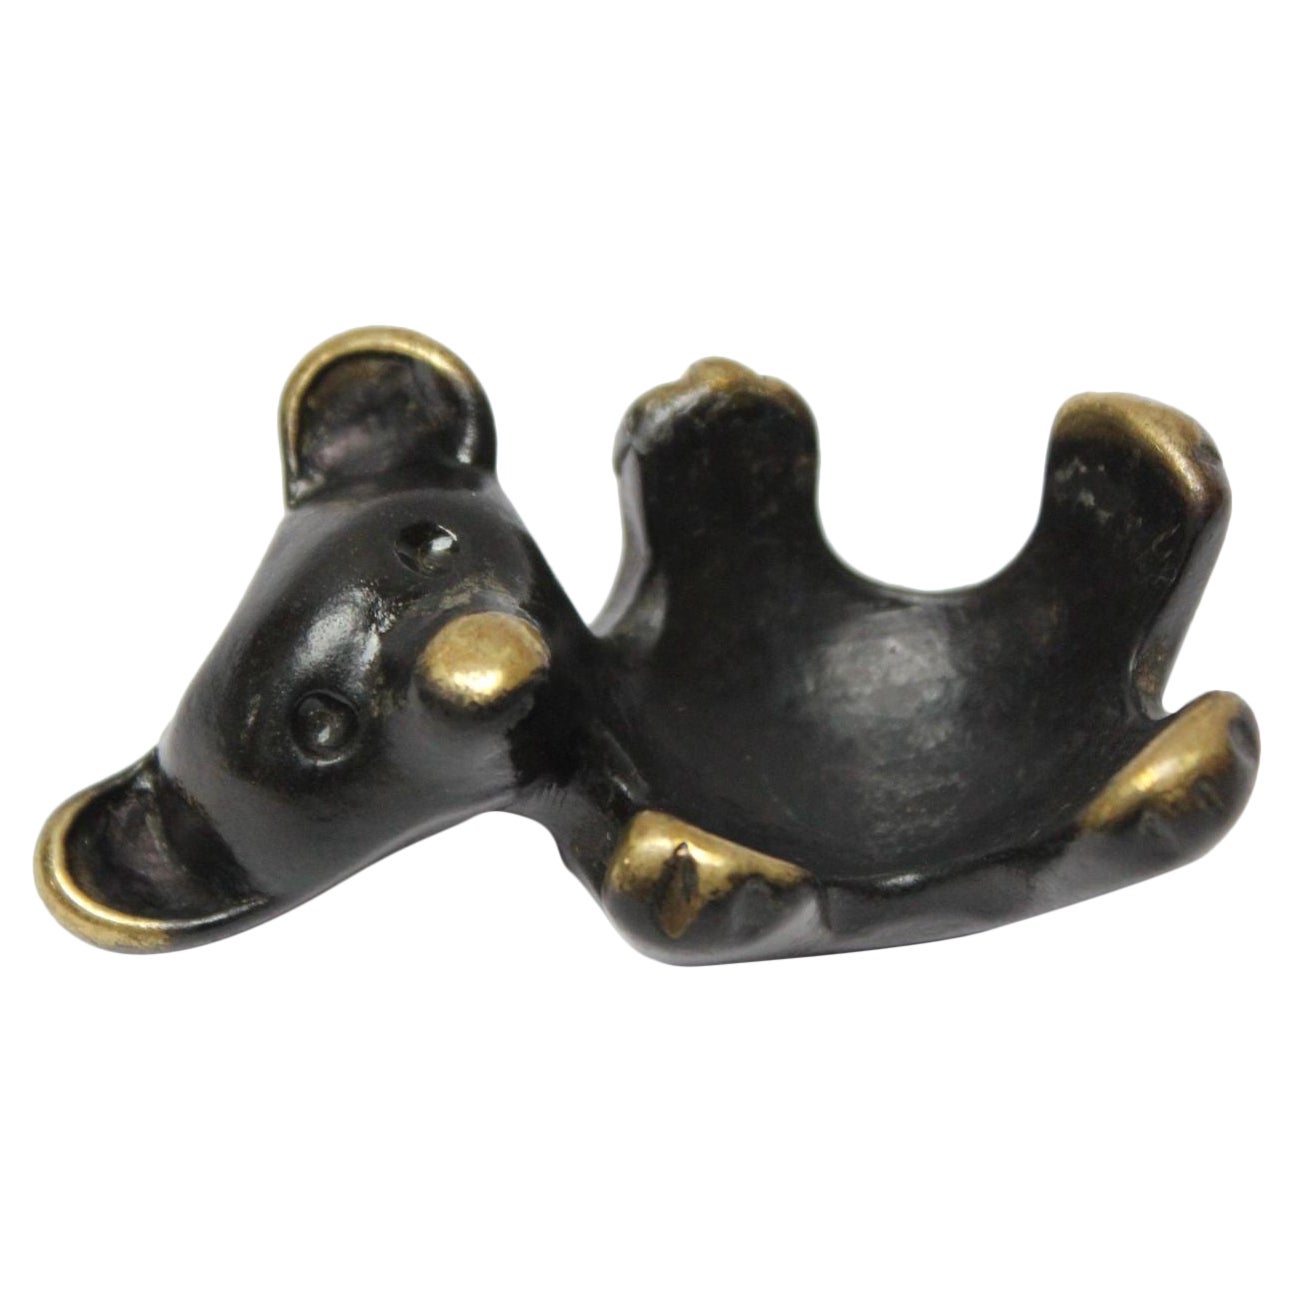 Blackened Brass Bear Candleholder/Figurine by Walter Bosse and Herta Baller For Sale